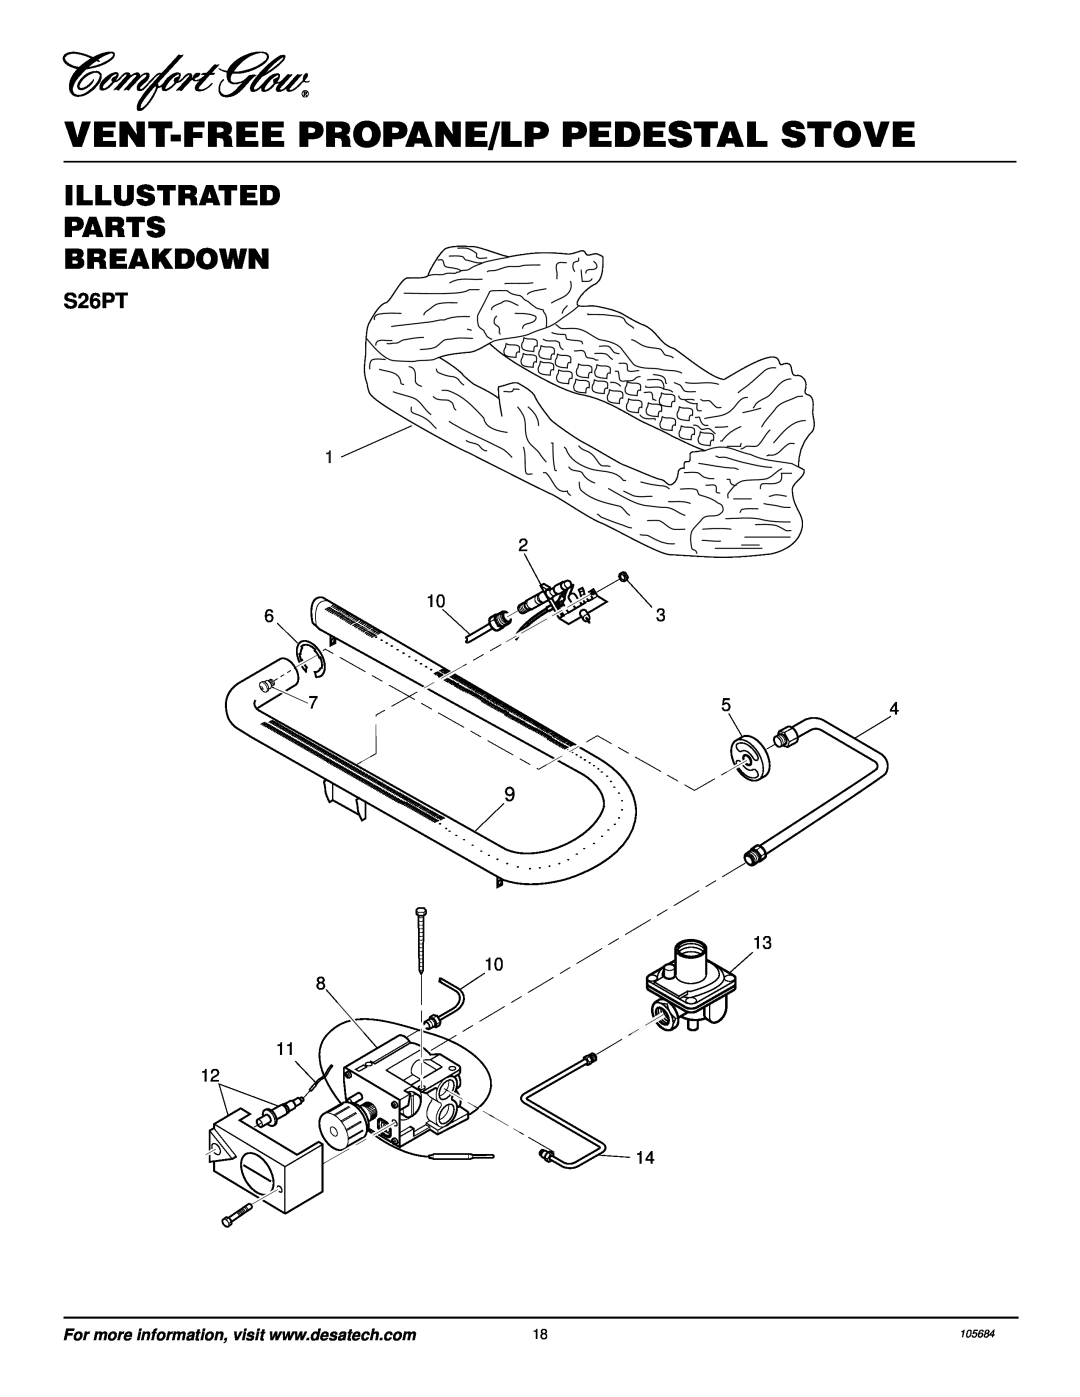 Desa Tech S26PT installation manual Illustrated Parts Breakdown, Vent-Free Propane/Lp Pedestal Stove, 105684 